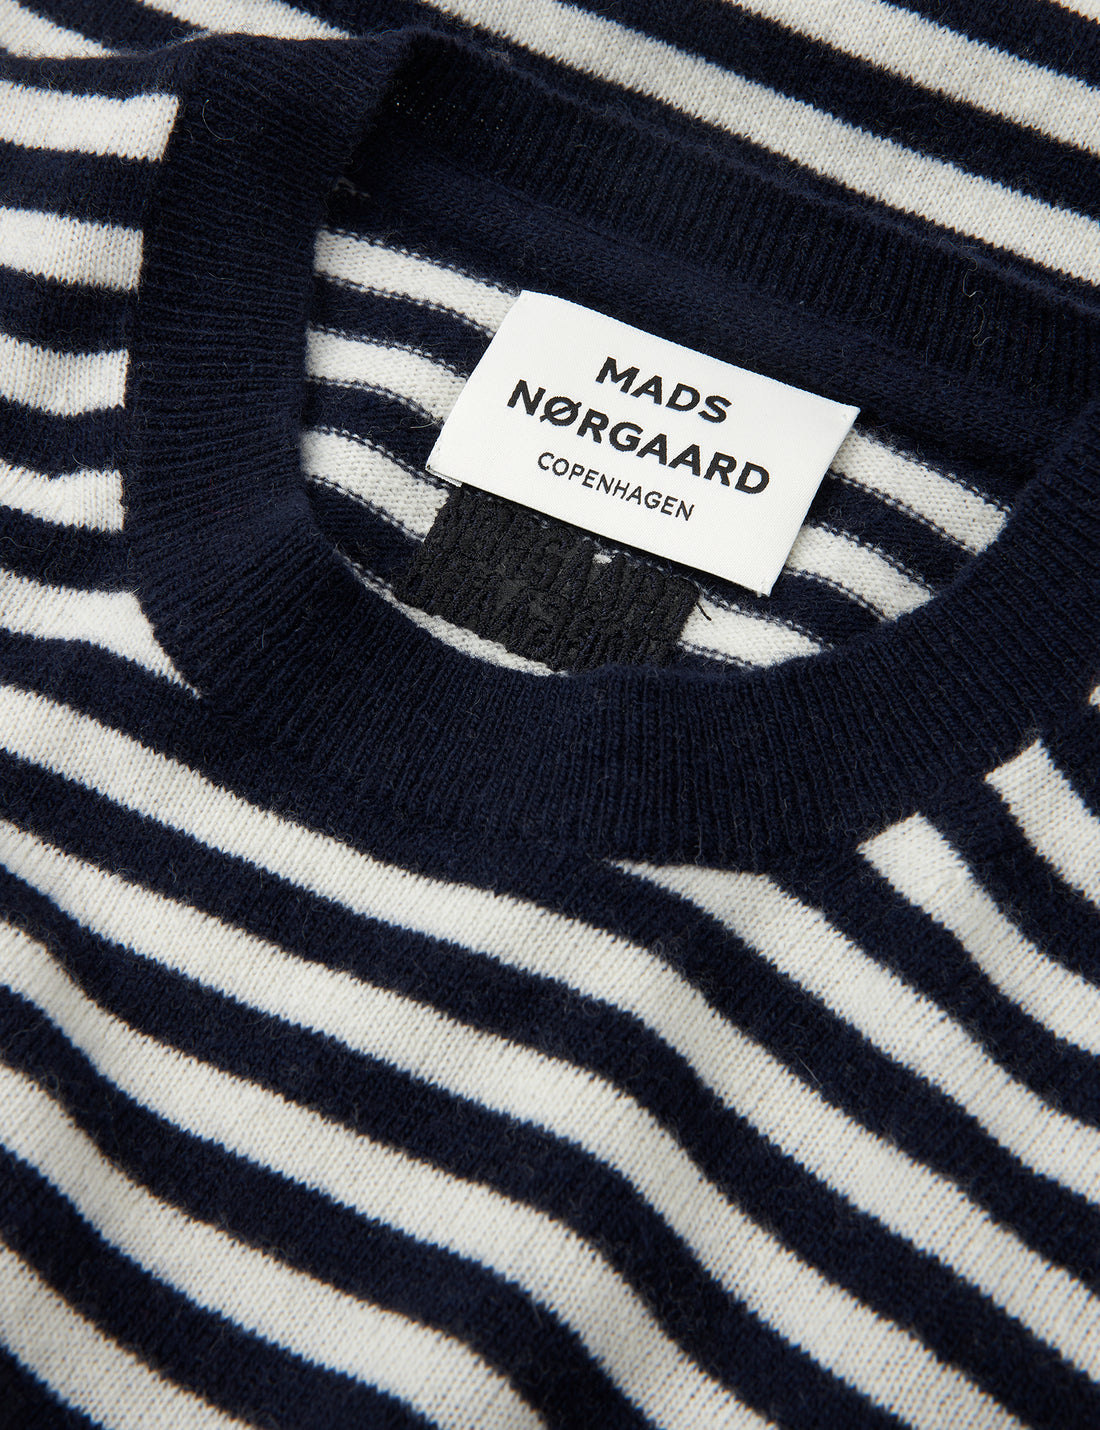 Mads Norgaard Eco Wool Stripe Kasey Sweater - Deep Well/Winter White